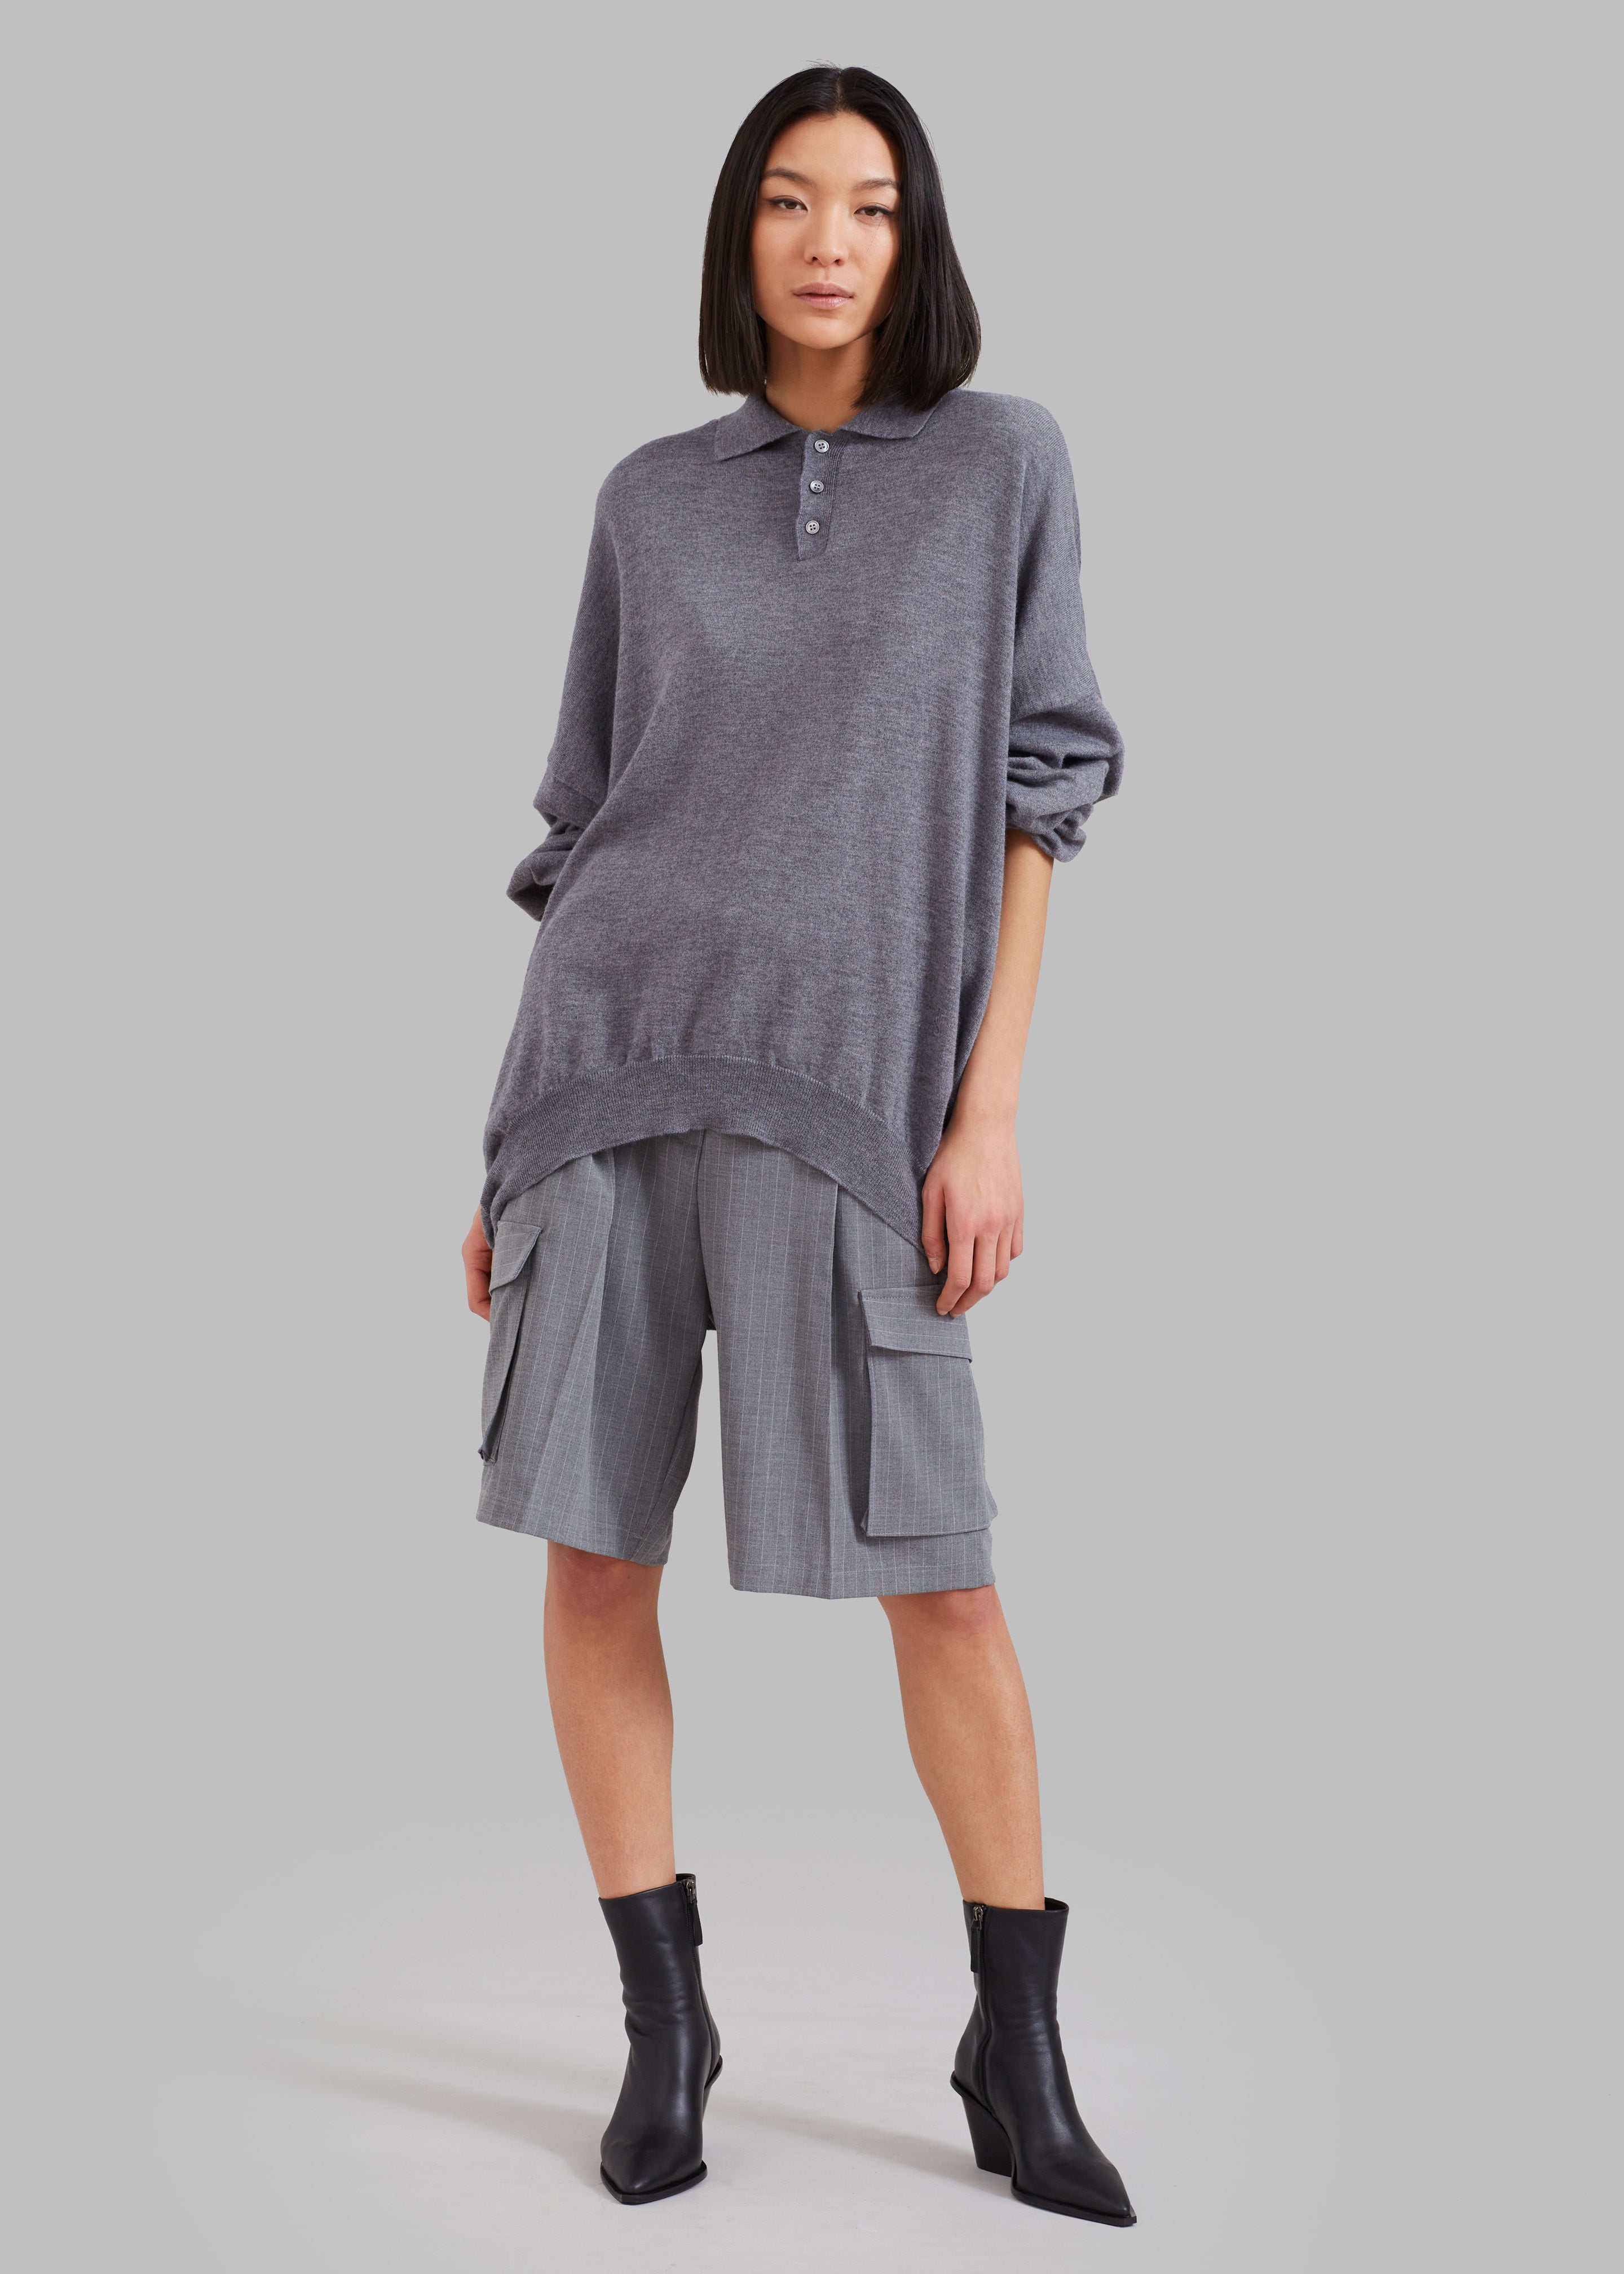 Meriel Polo Sweater - Grey - 3